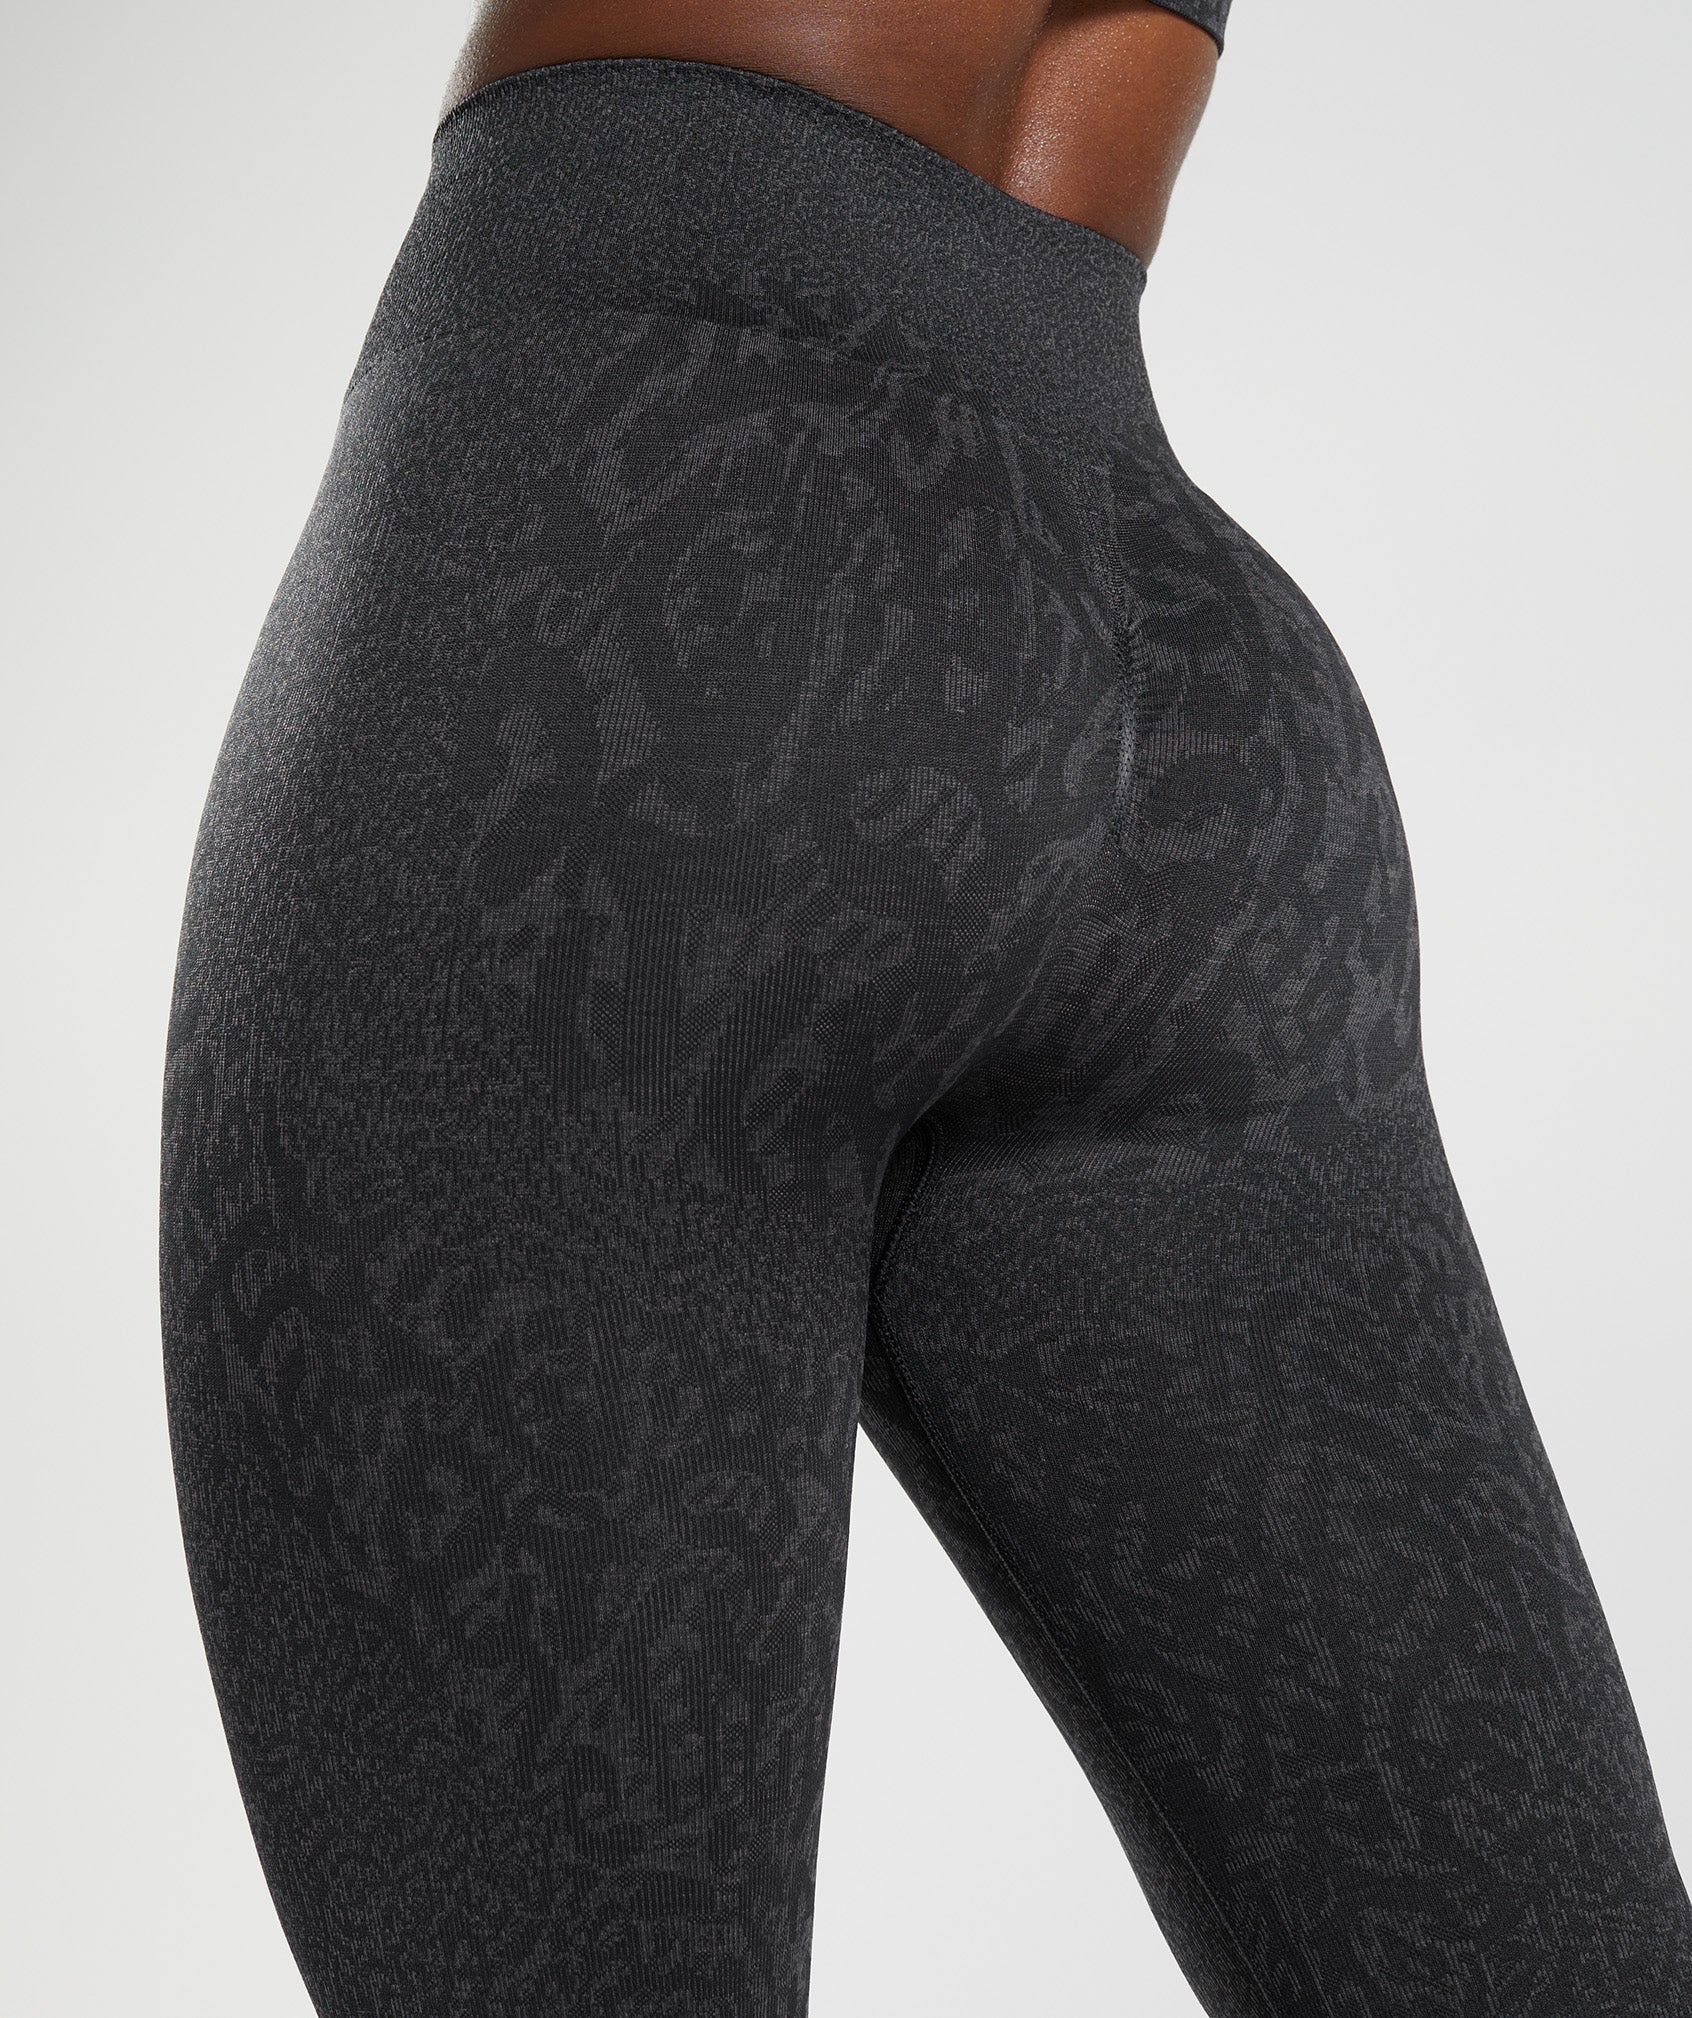 Gymshark Adapt Animal Seamless Legging Black Size XS - $45 (35% Off Retail)  - From julie